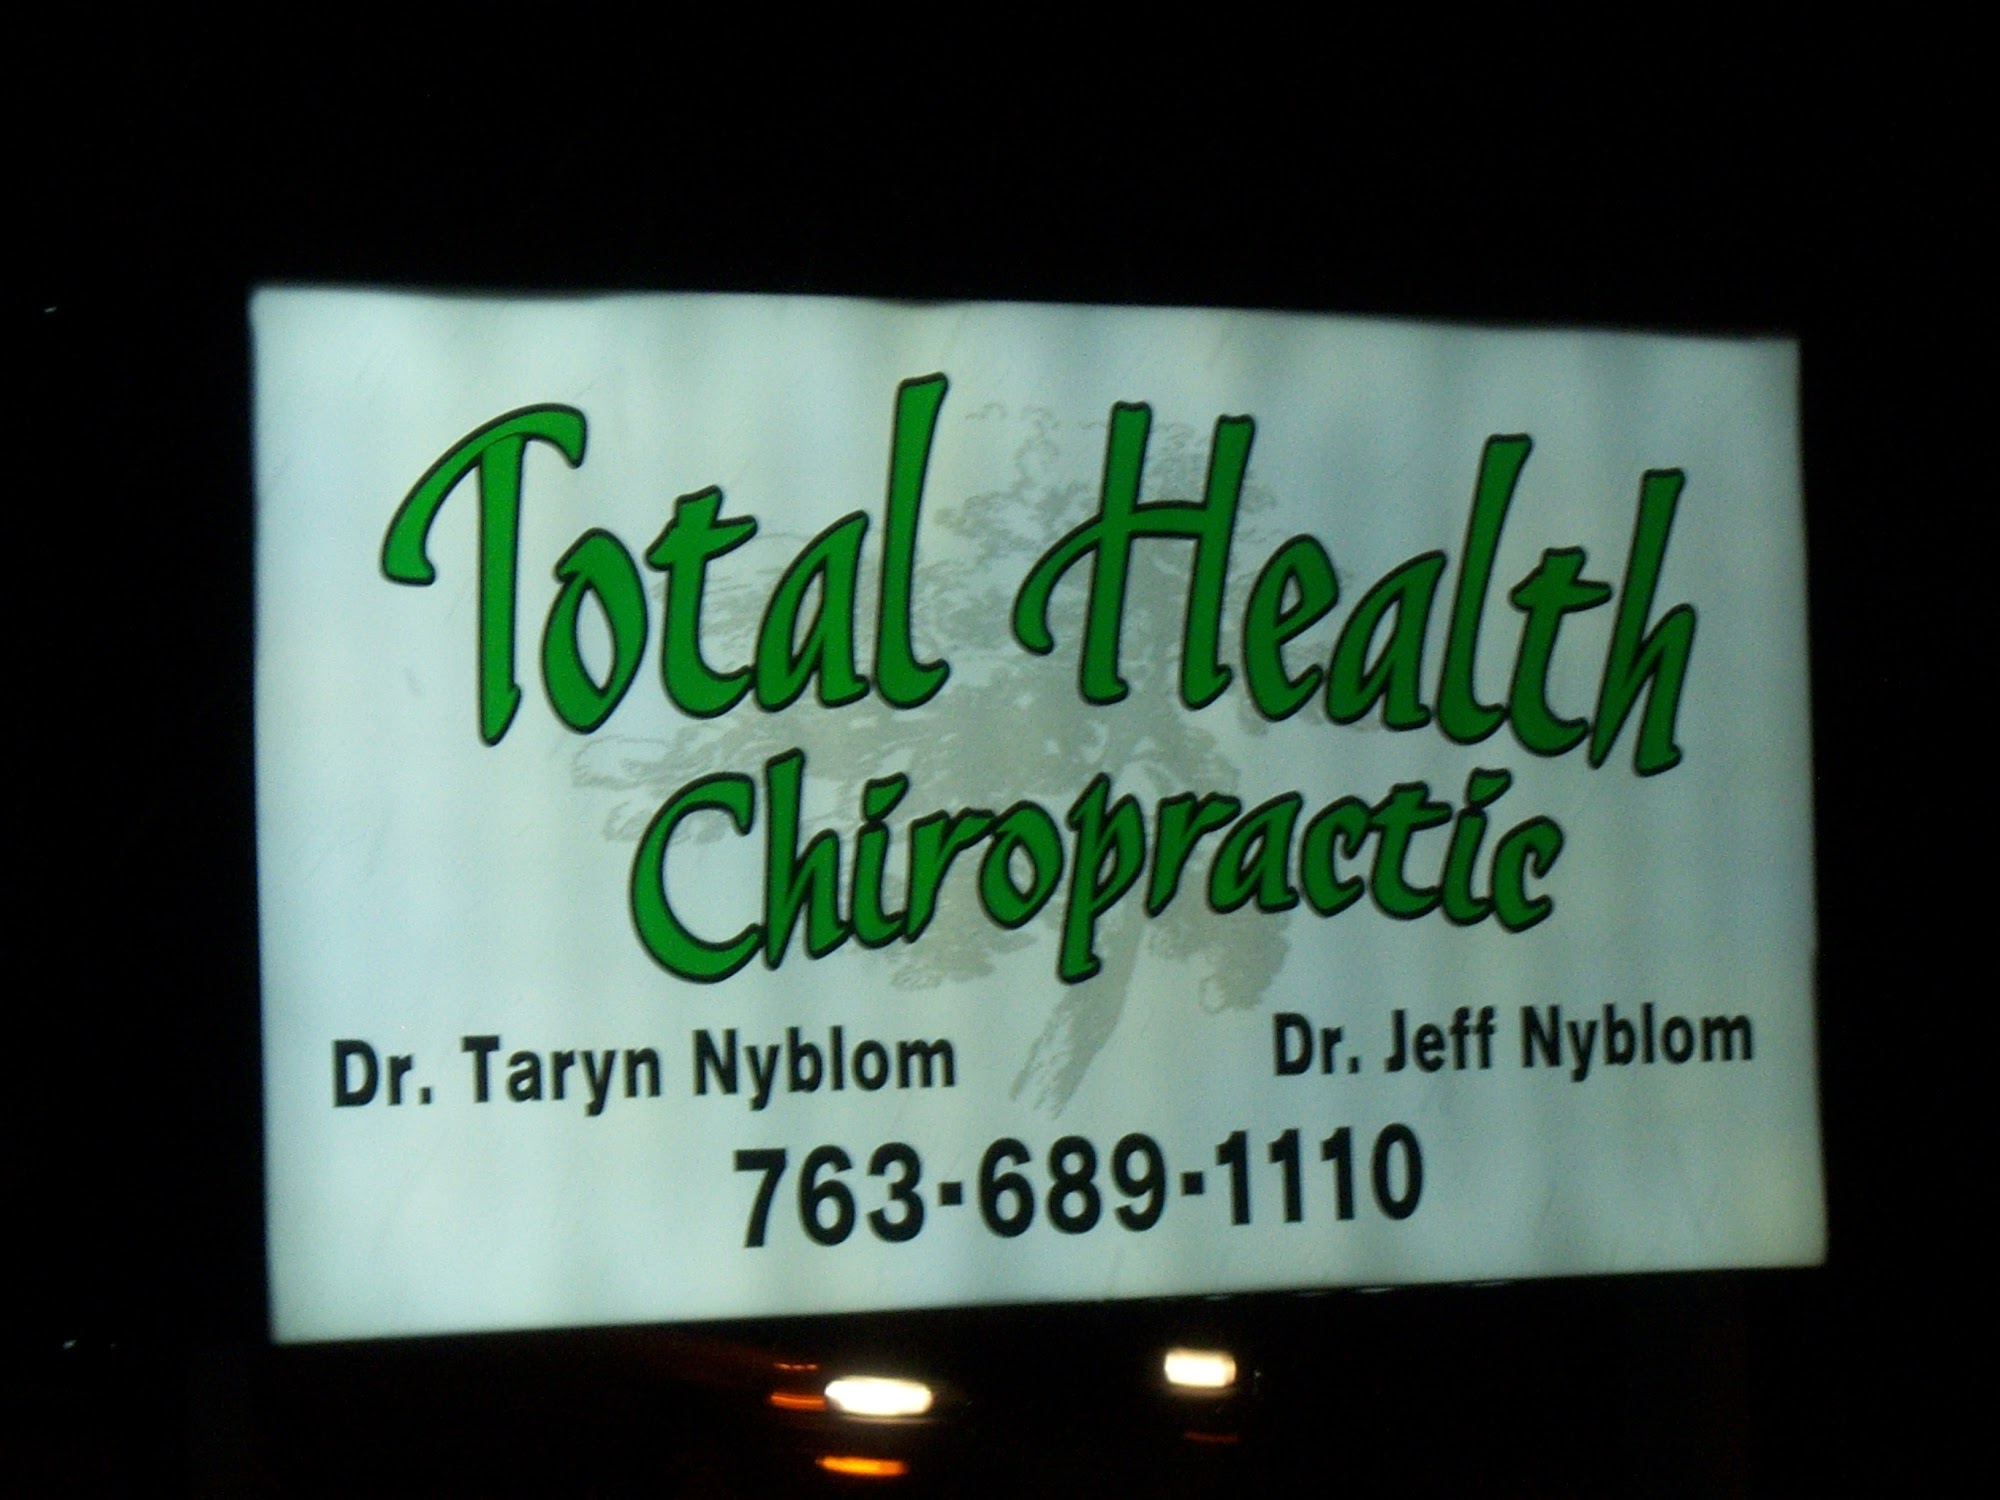 Total Health Chiropractic 911 Main St S, Cambridge Minnesota 55008